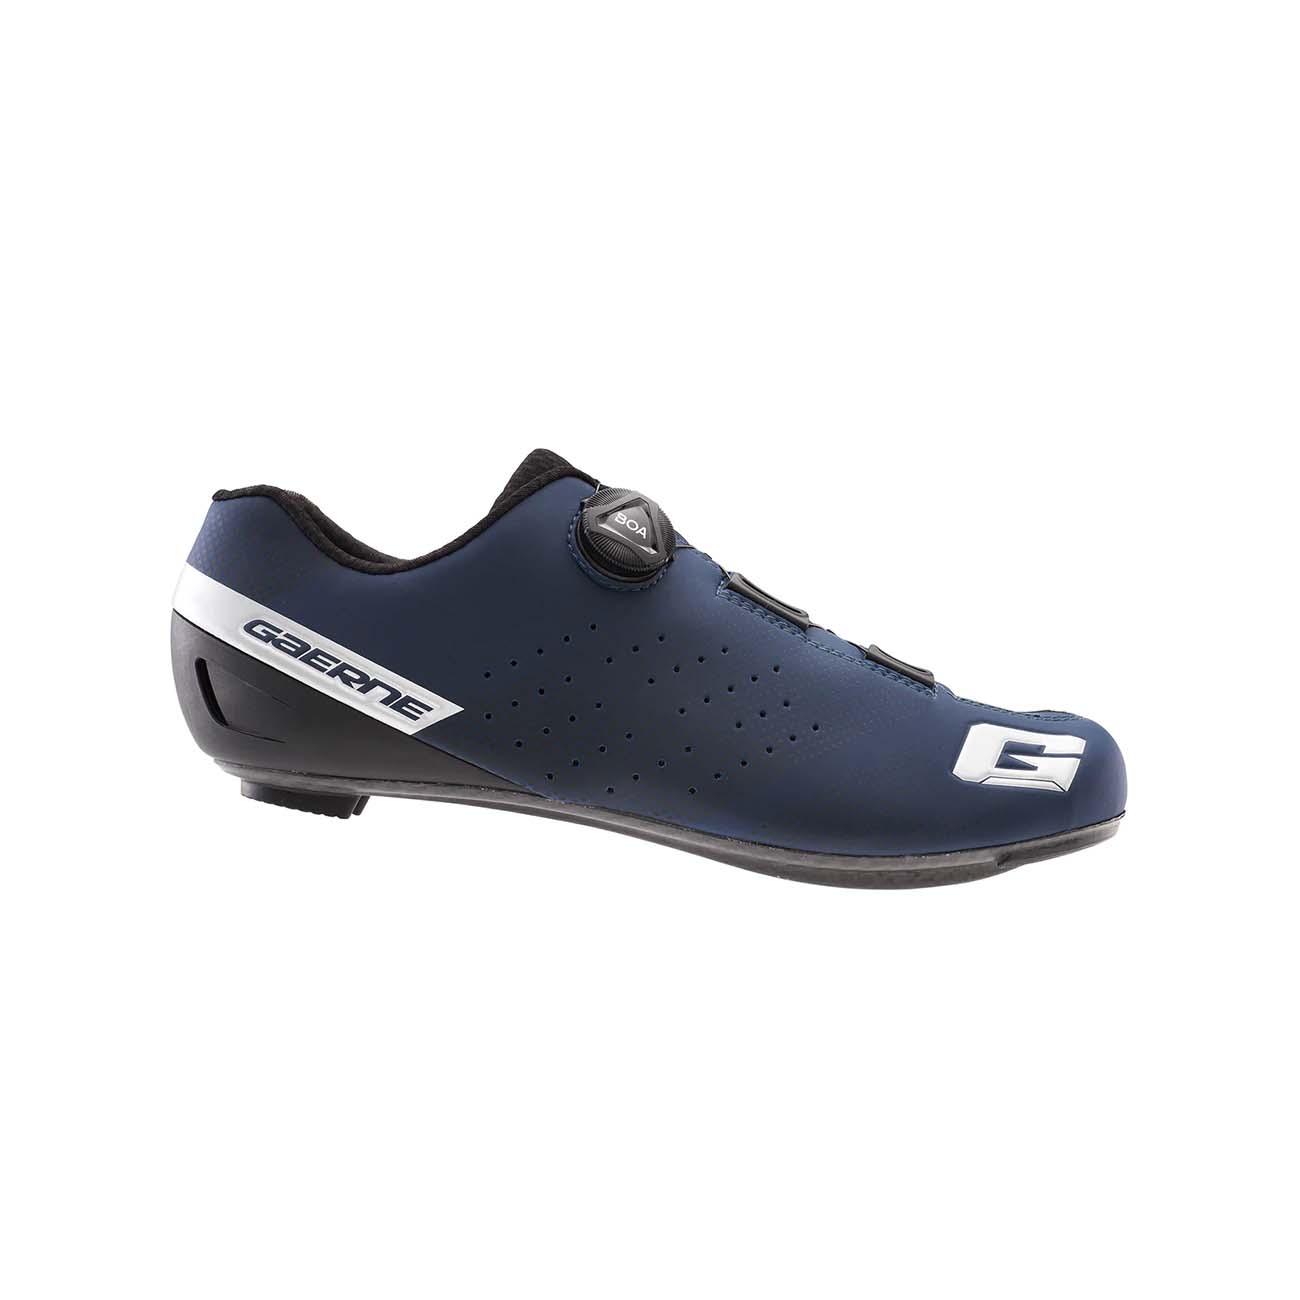 GAERNE Kerékpáros Cipő - TORNADO - Kék/fekete